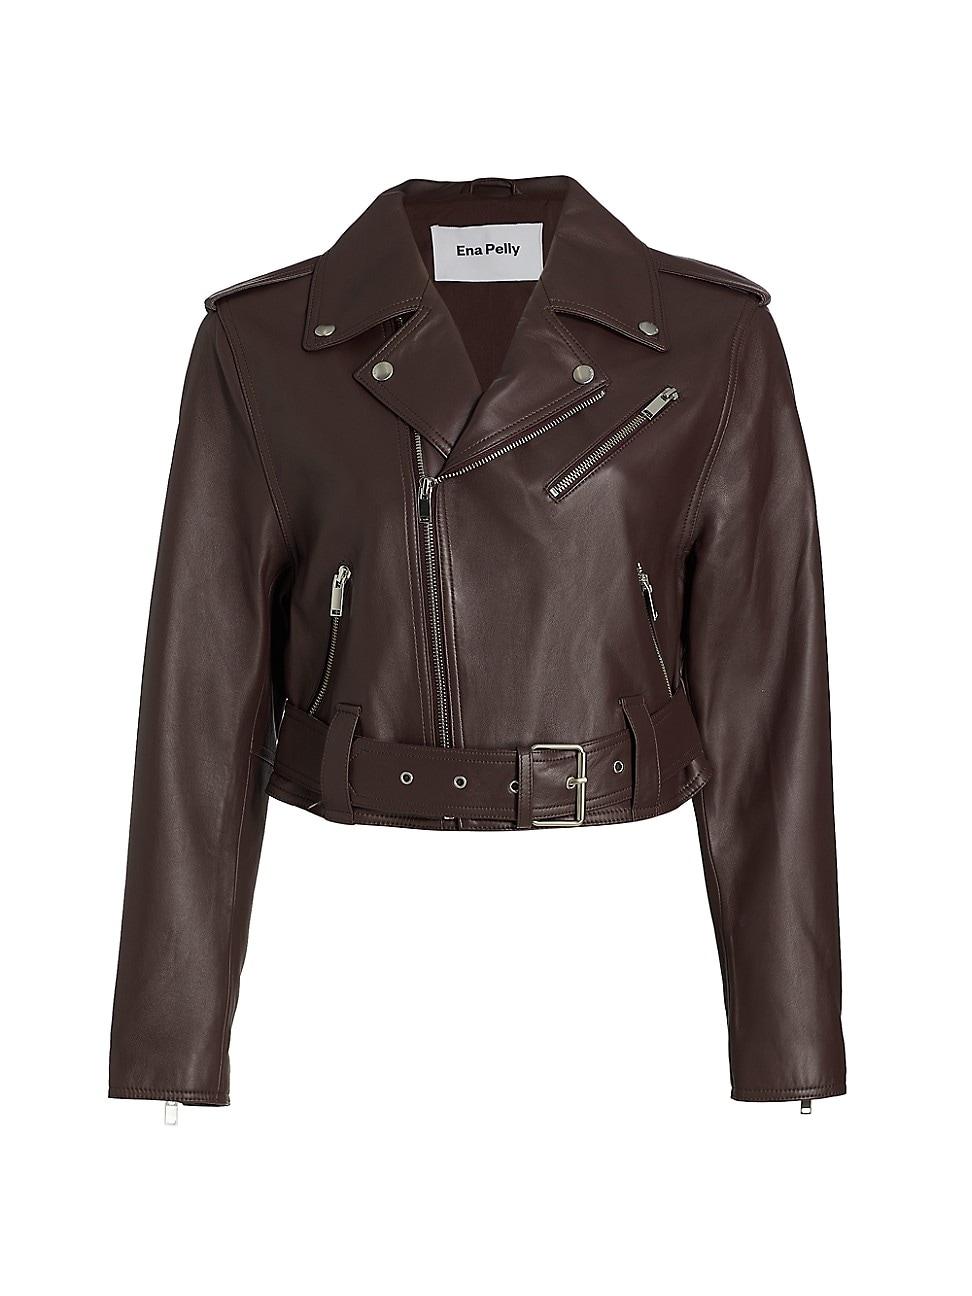 ENA PELLY Goldie Leather Jacket in Brown | Lyst